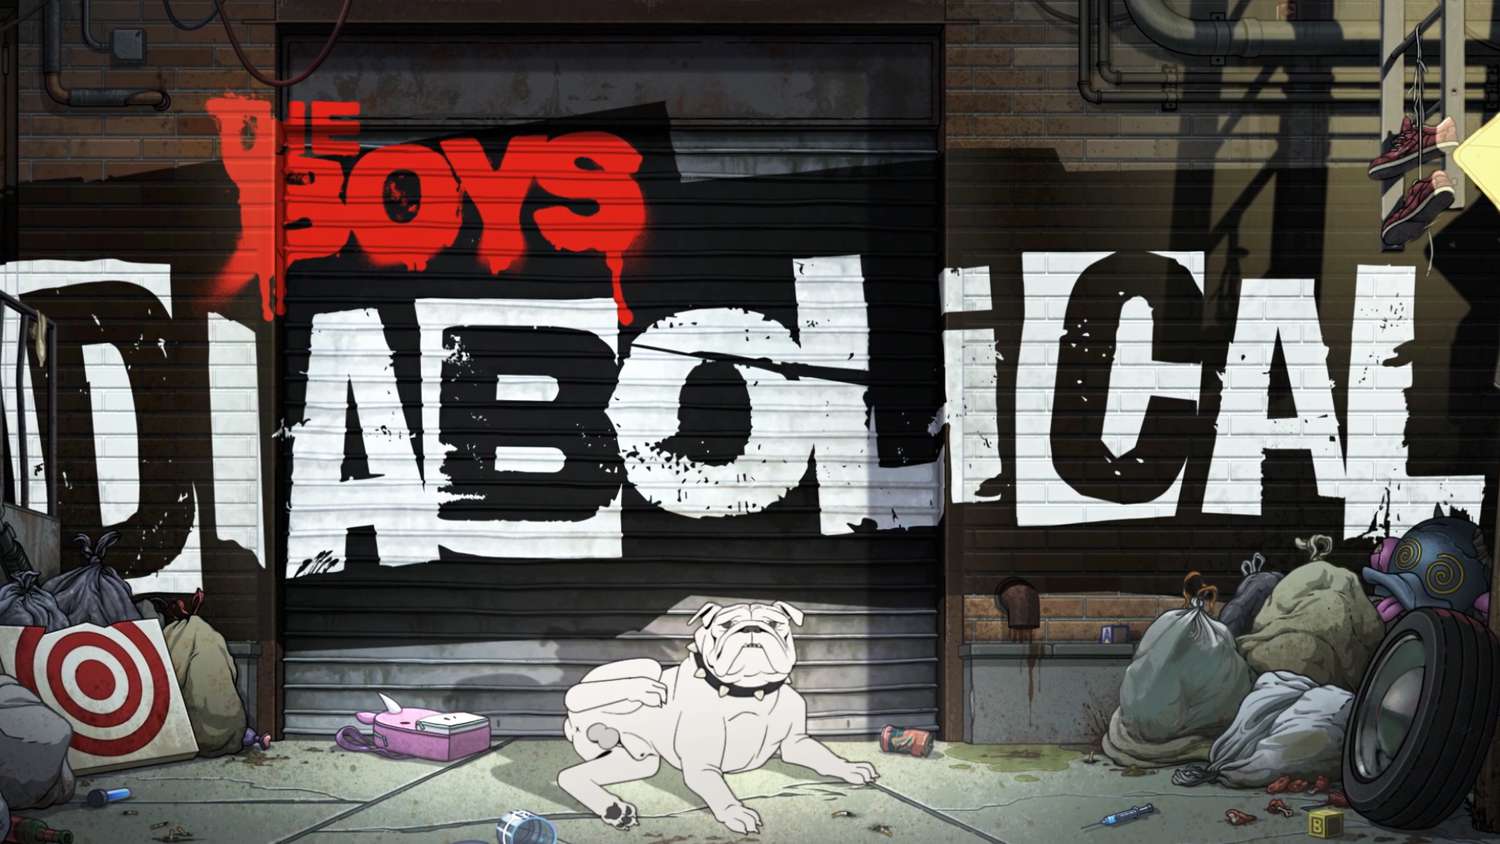 Diabolical The Boys animated series